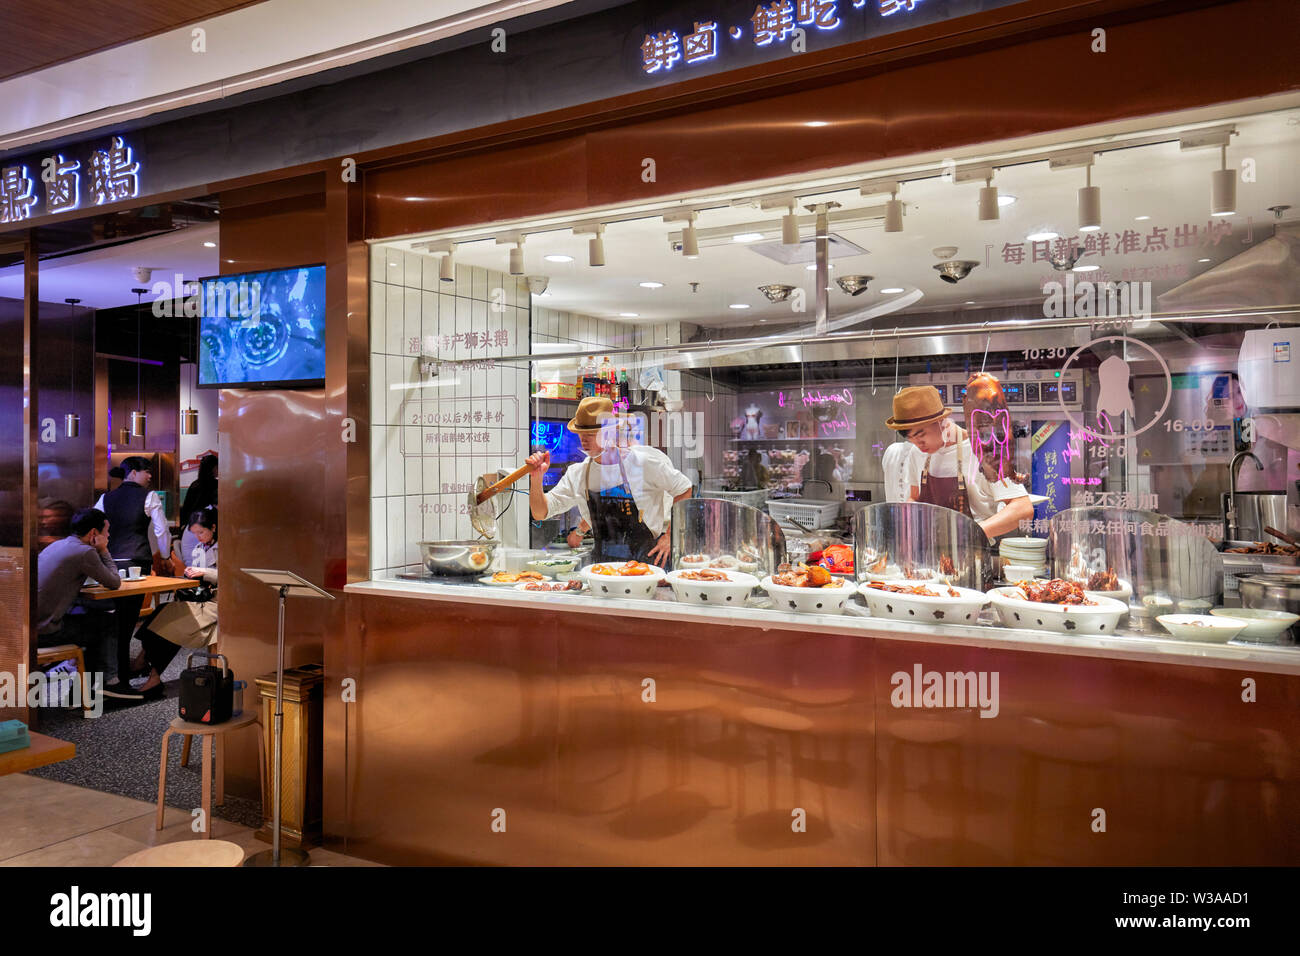 Chinese restaurant with an open kitchen at Wongtee Plaza shopping mall. Shenzhen, Guangdong Province, China. Stock Photo